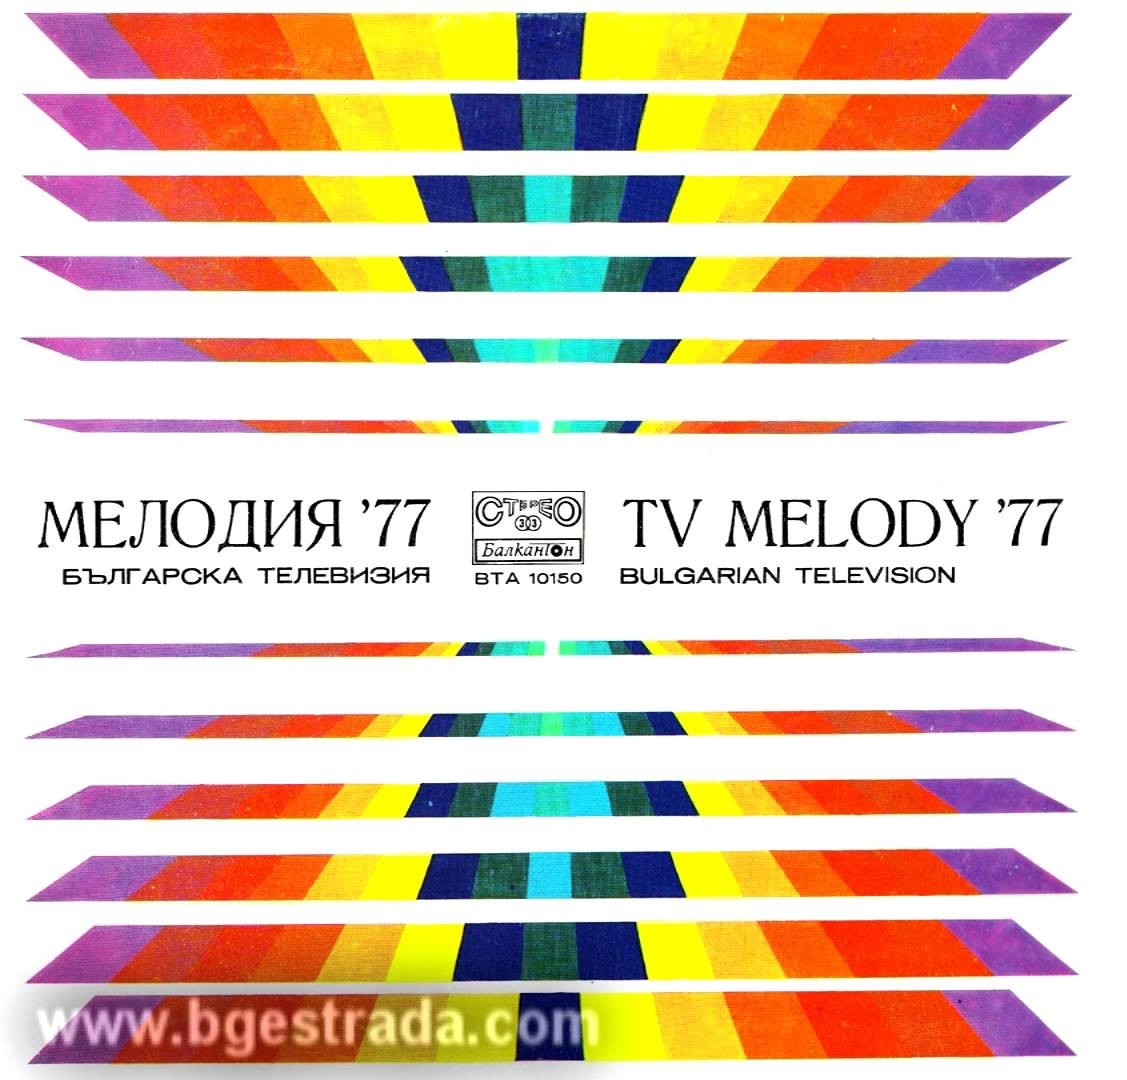 Българска телевизия. Мелодия  '77